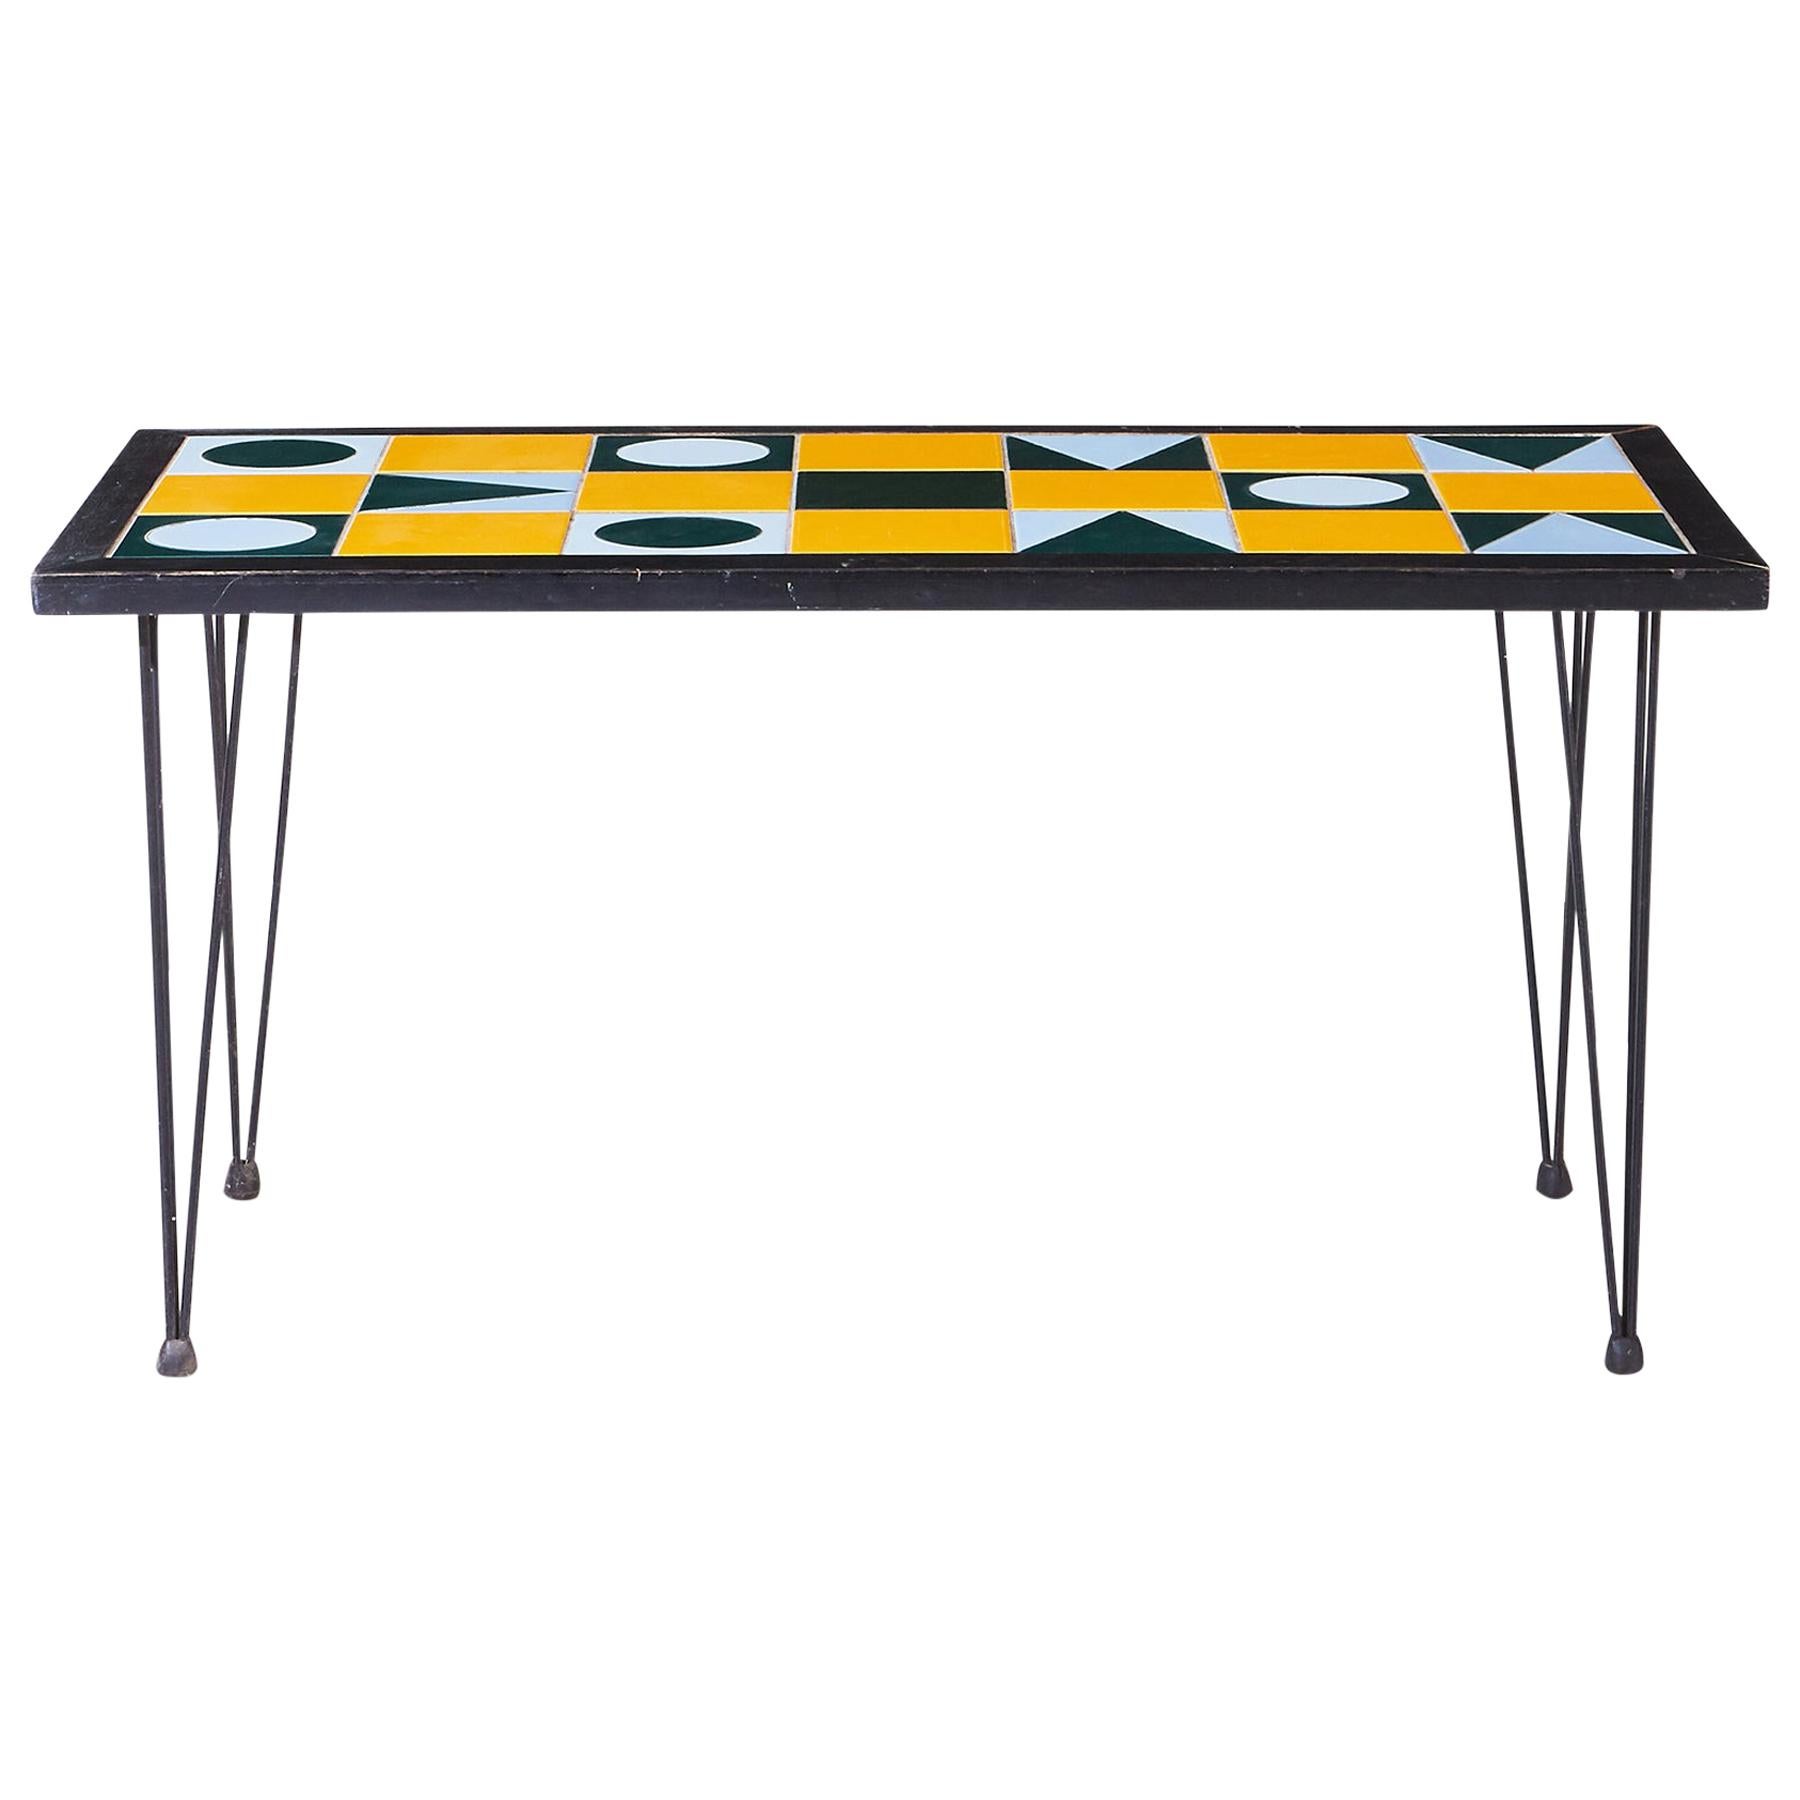 1960s Swedish Modern Geometric Tile Top Coffee Table For Sale